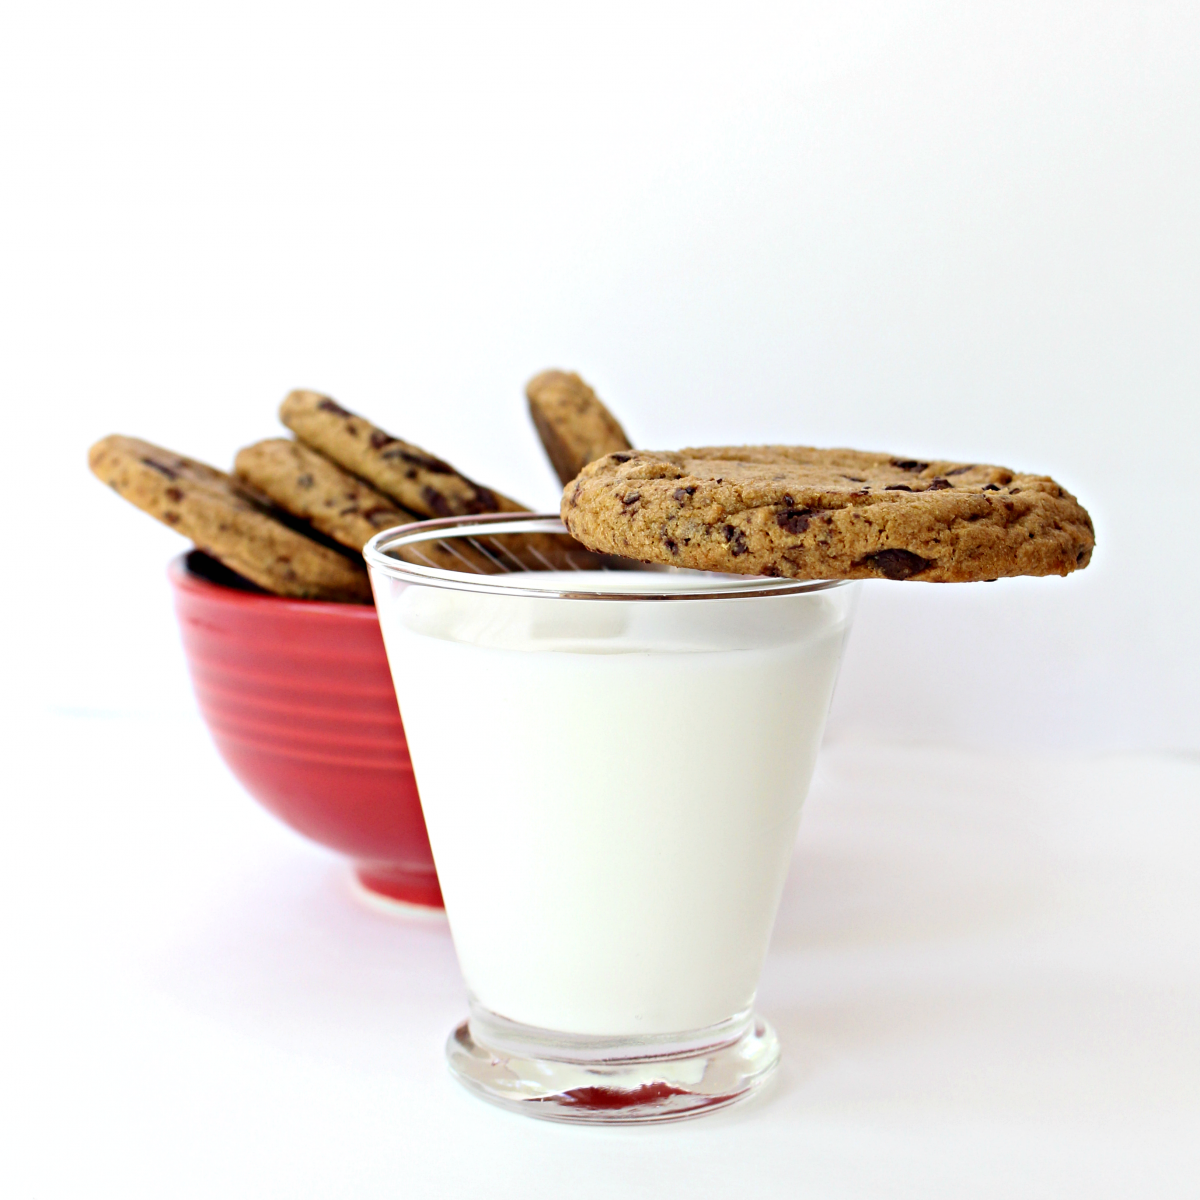 cookie balanced on rim of glass of milk